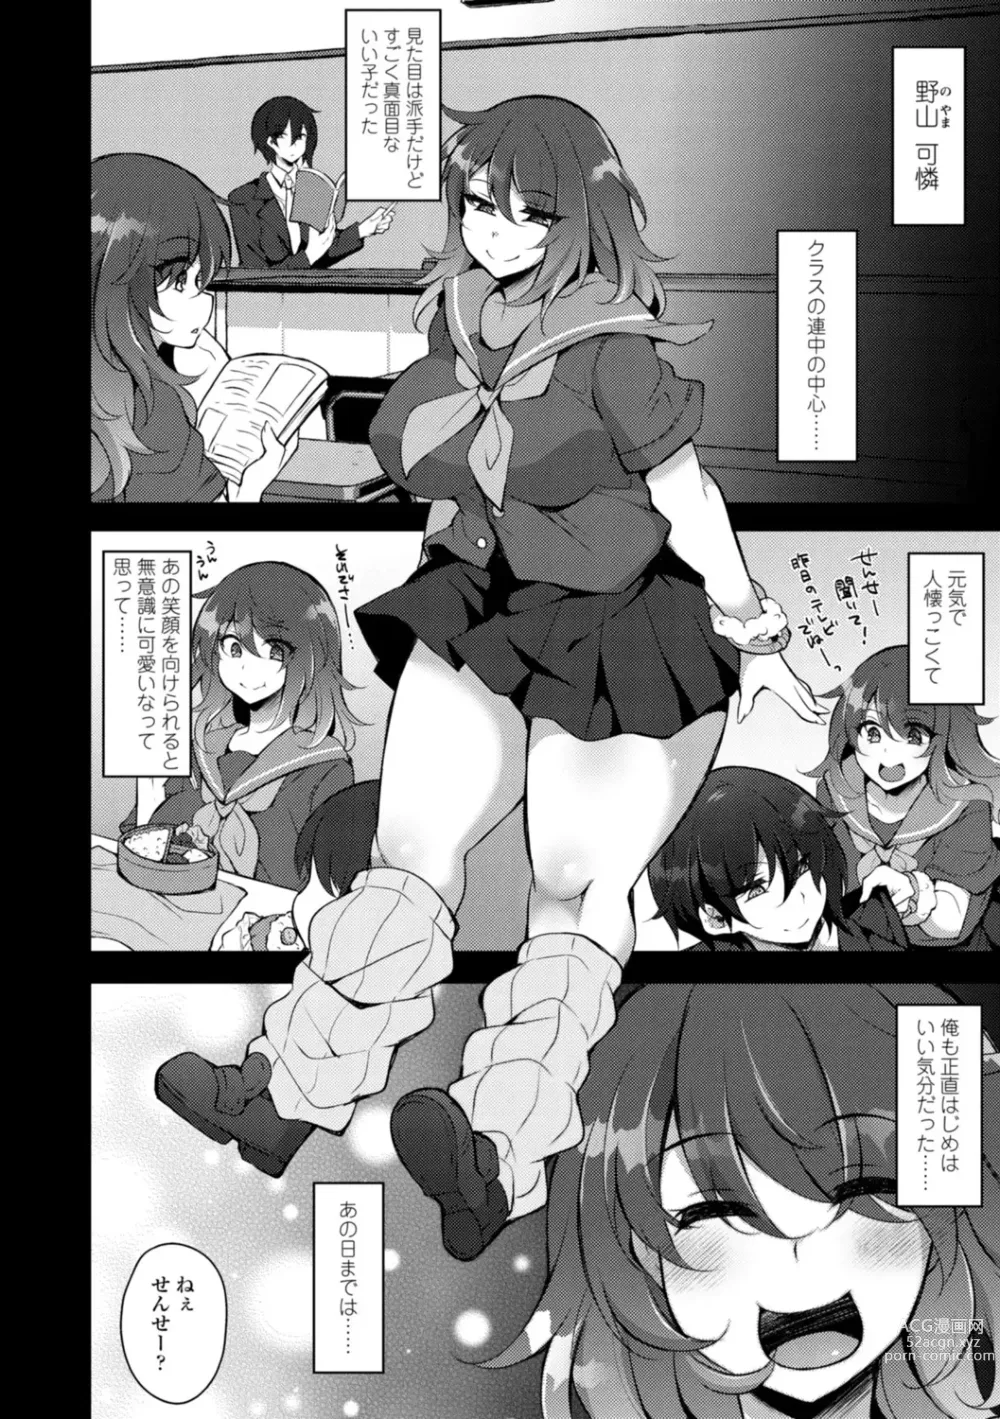 Page 8 of manga Onnanoko-sama no Iu Toori